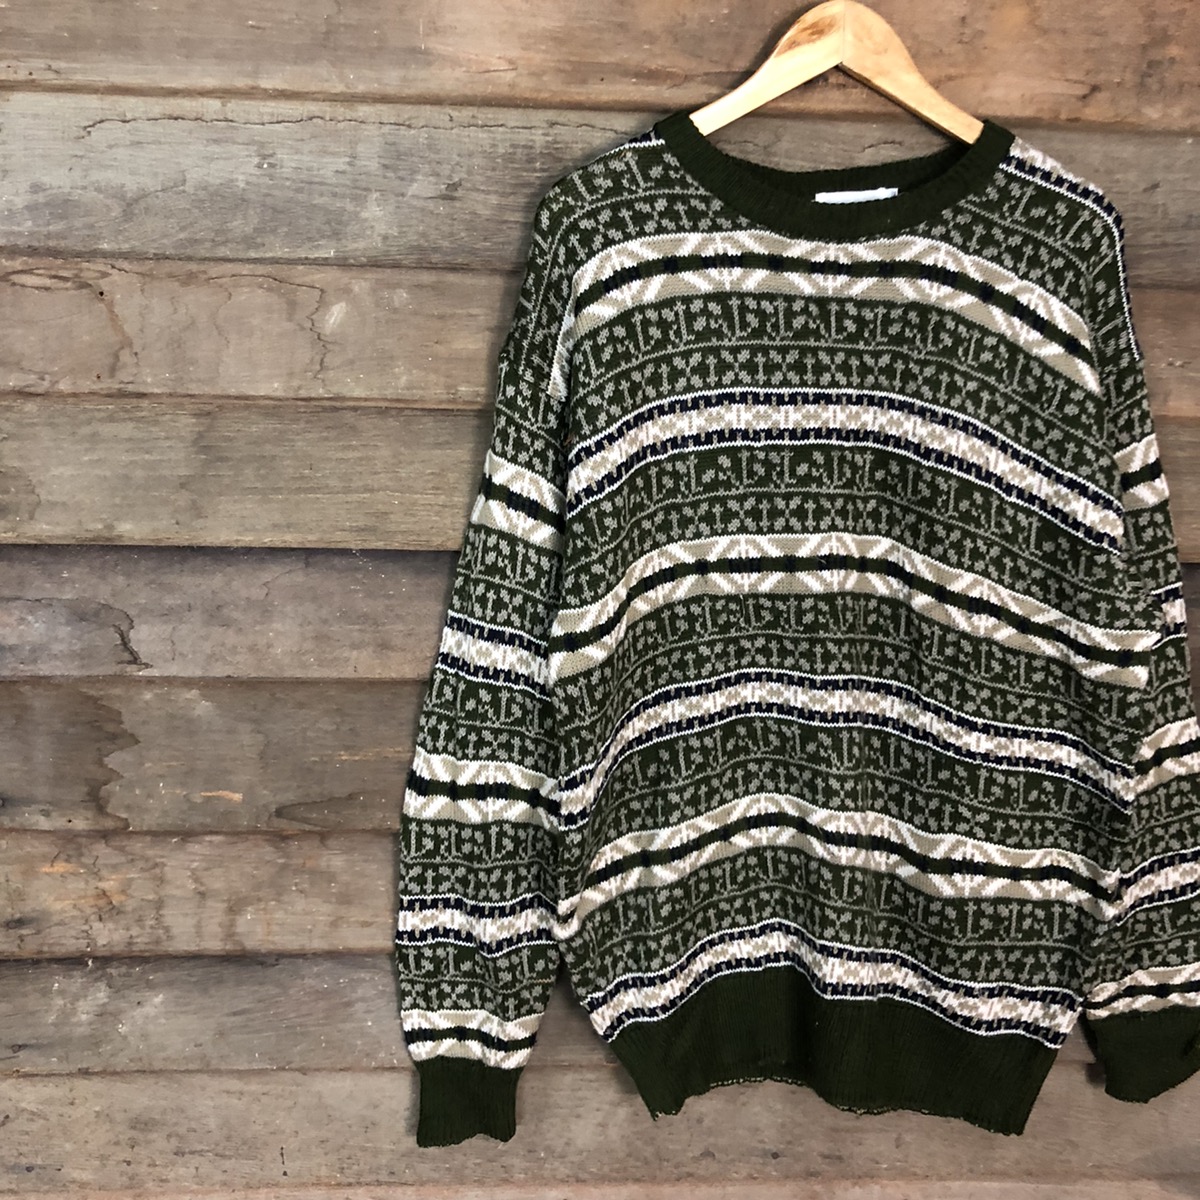 Homespun Knitwear - Yes Pleeze Patterned Knit Sweater - 7